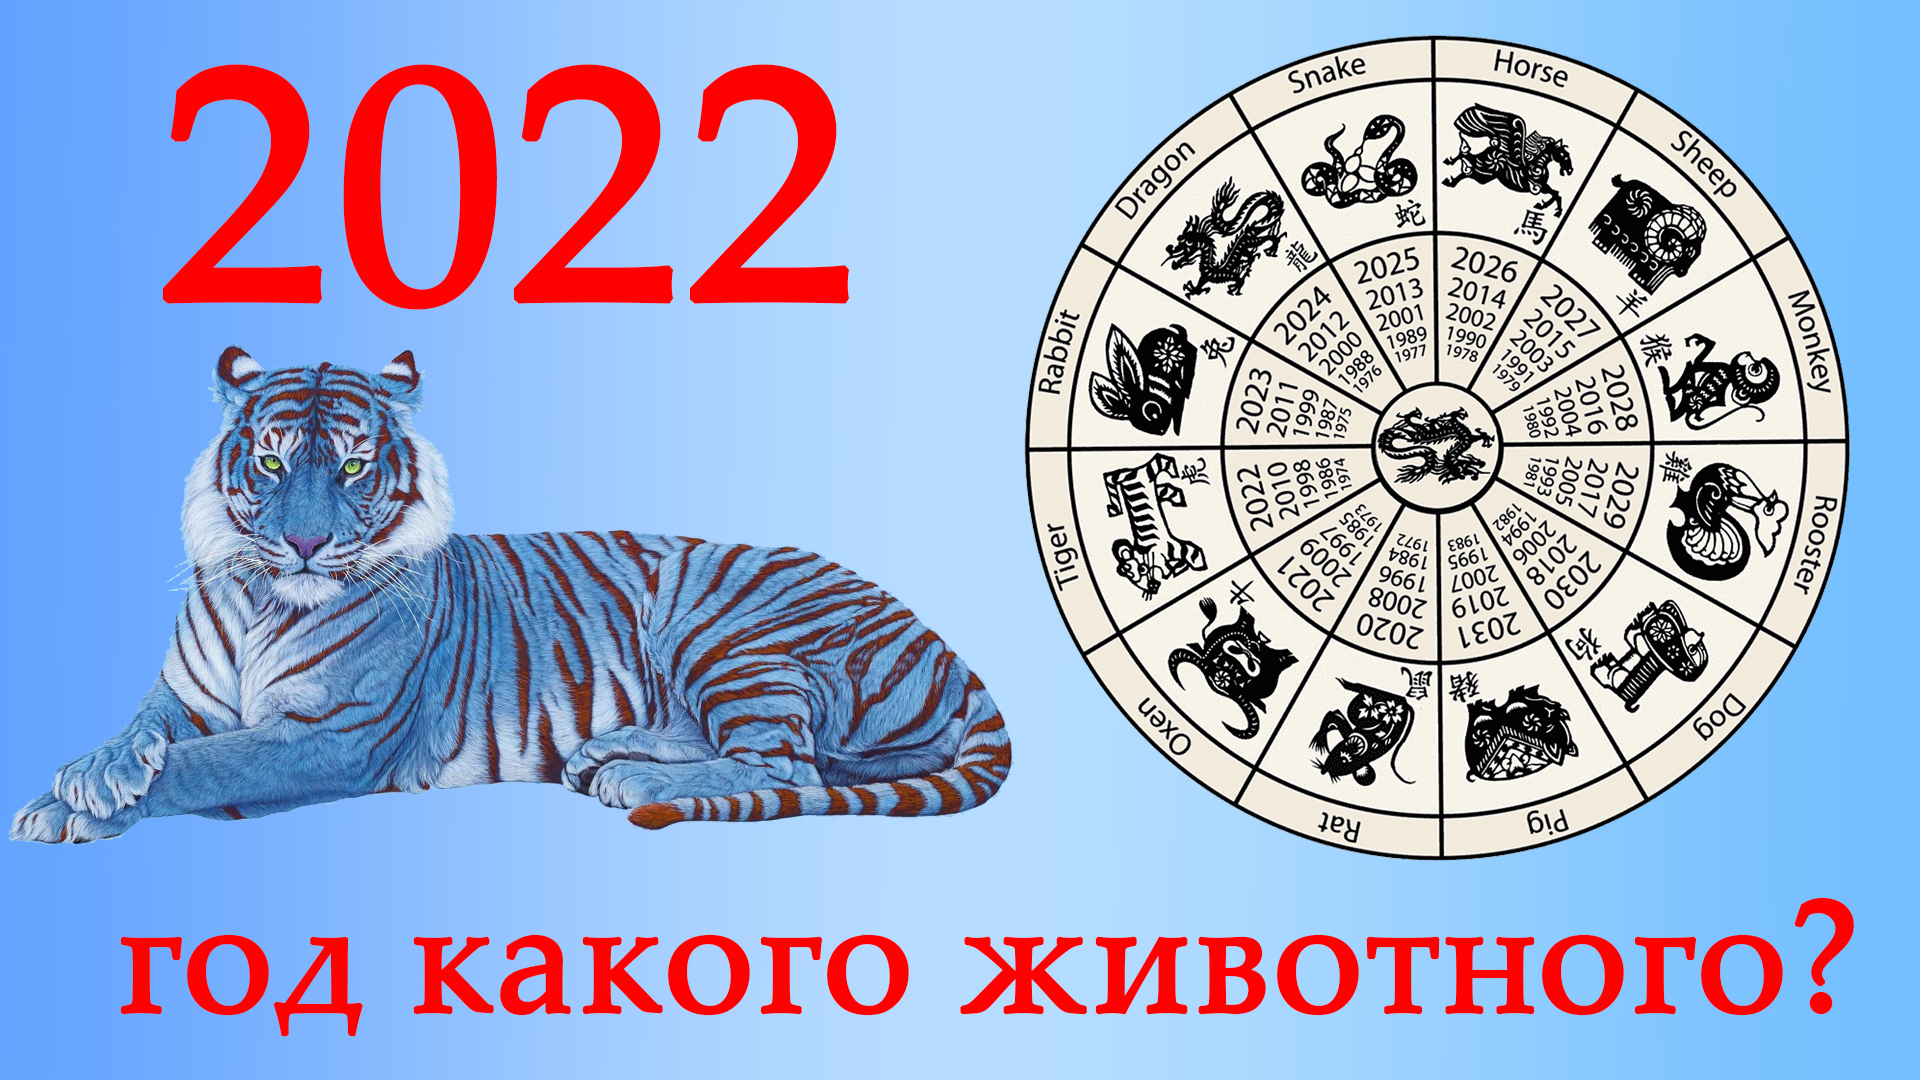 2022 Год какого животногоэ. 2022 Год ко когоживотного. 2022 Год какого животного п. 2022 Год какой год. Какой год vi